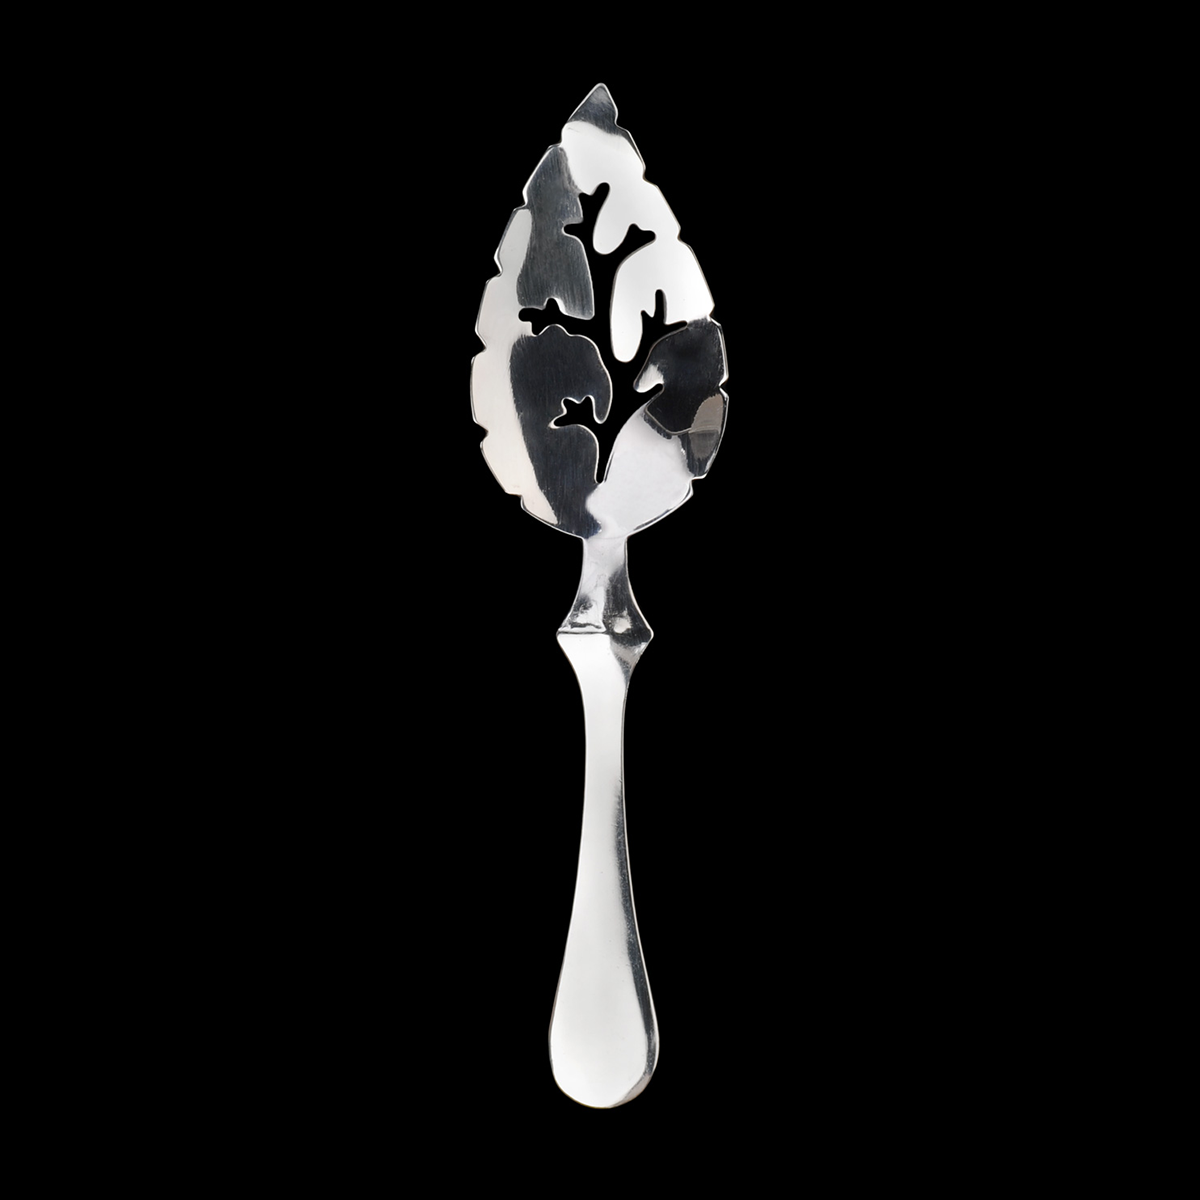 Leaf Absinthe Spoon